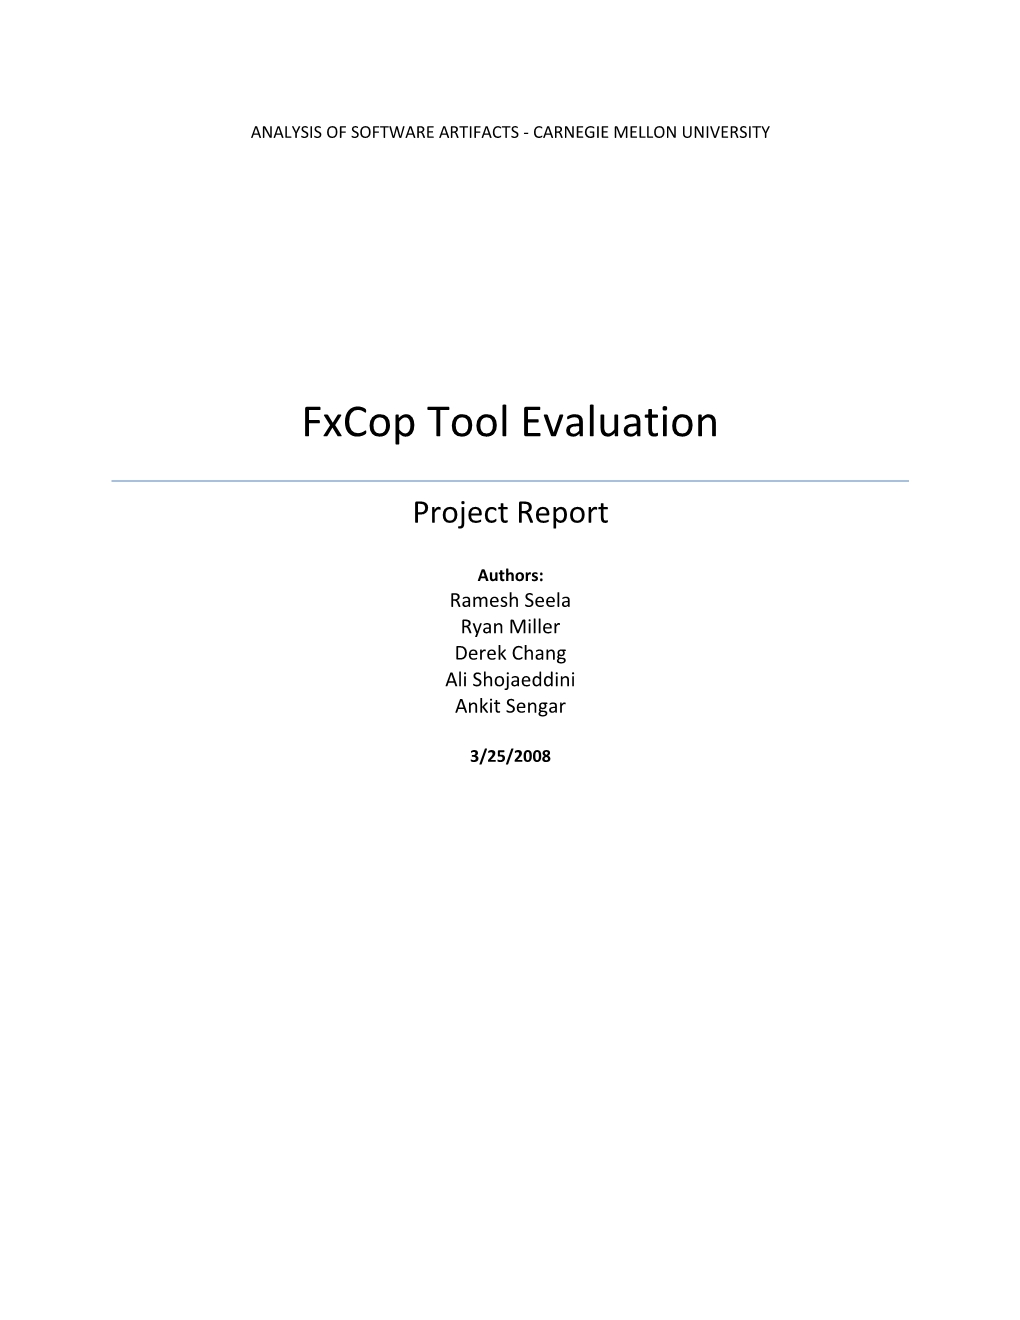 Fxcop Tool Evaluation